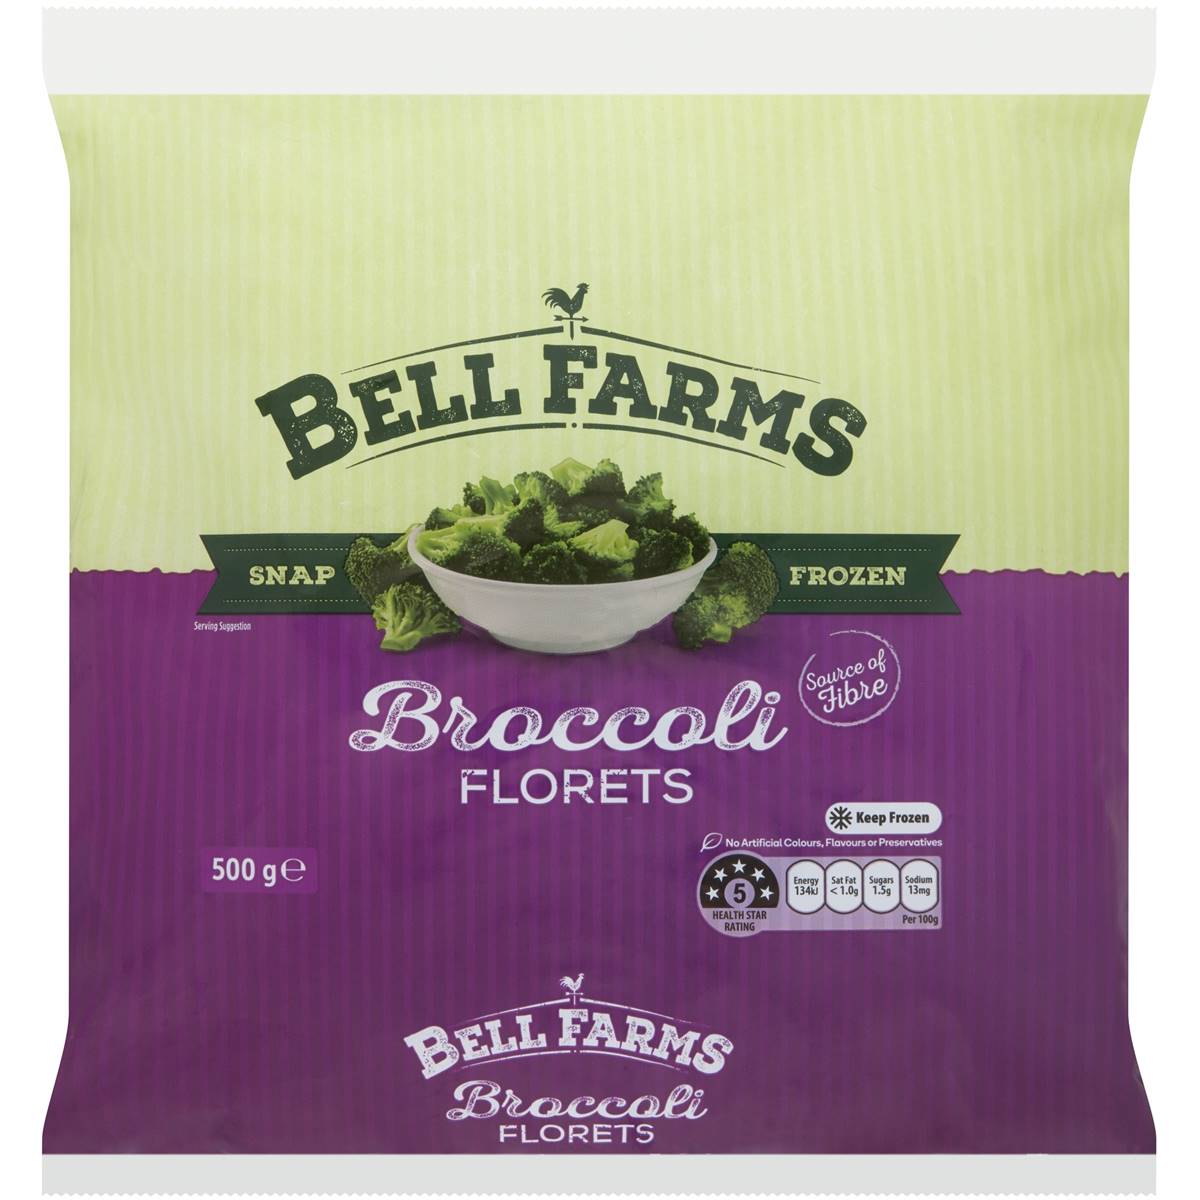 Calories in Bell Farms Snap Frozen Broccoli Florets